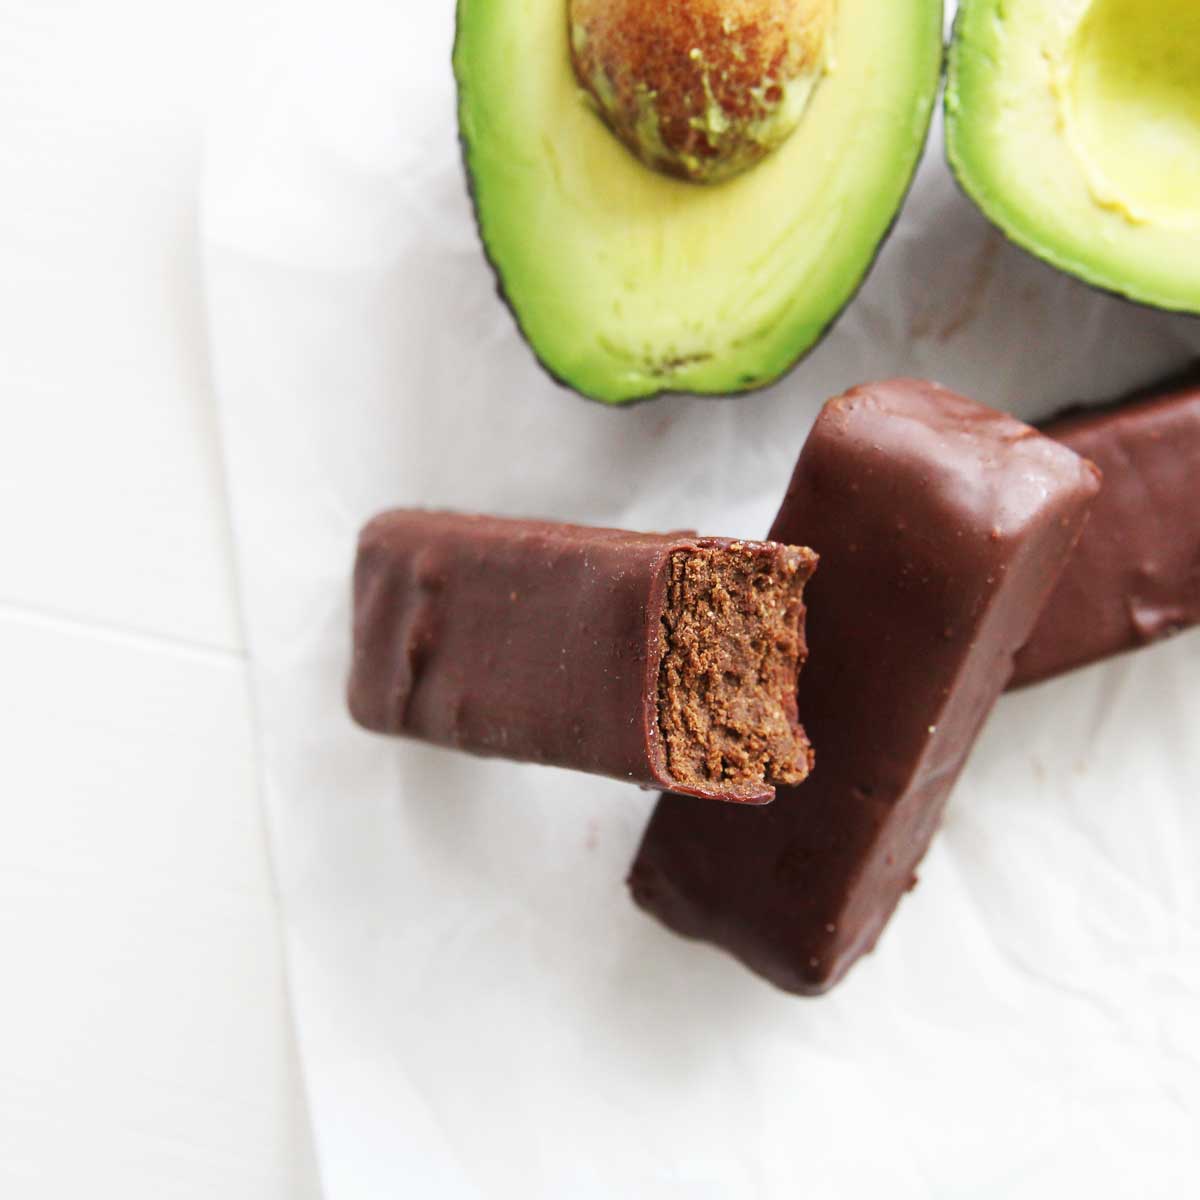 Easy Chocolate Avocado Protein Bars (Healthy, Vegan & Low Carb Recipe!) - Chocolate Avocado Protein Bars